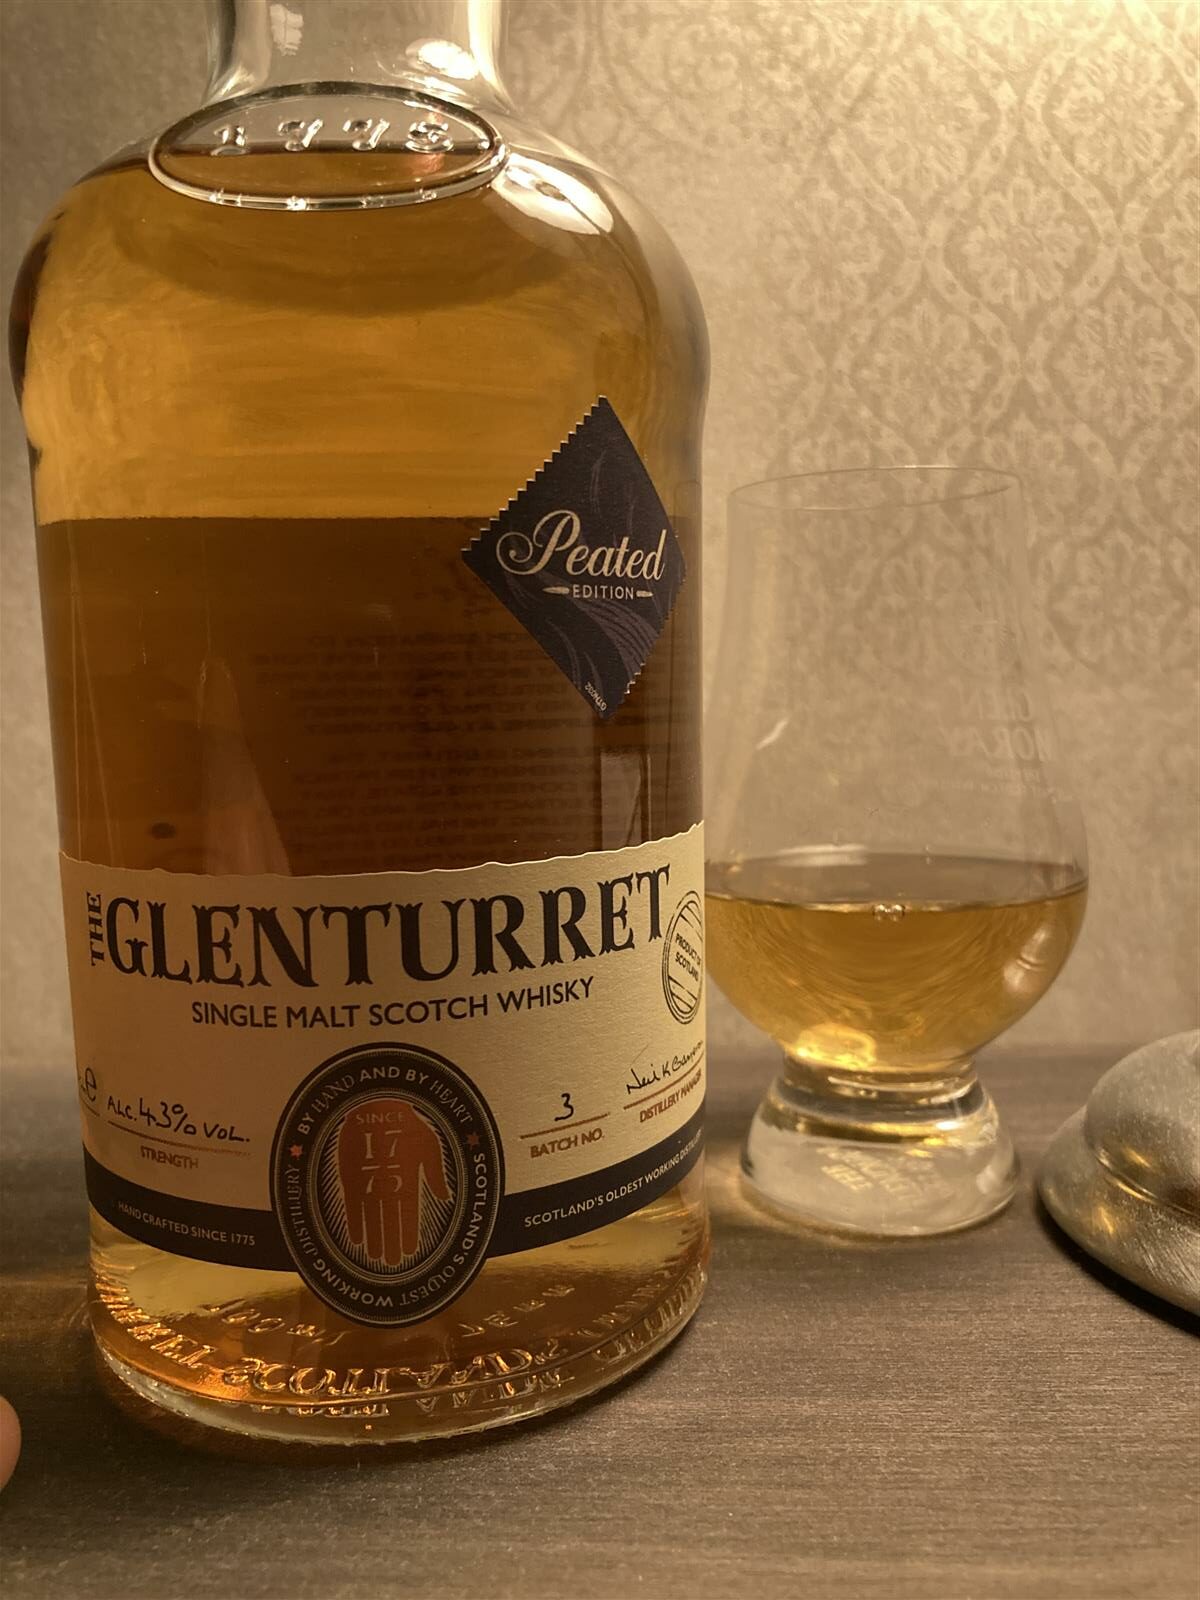 The Glenturret Peated Edition 43%